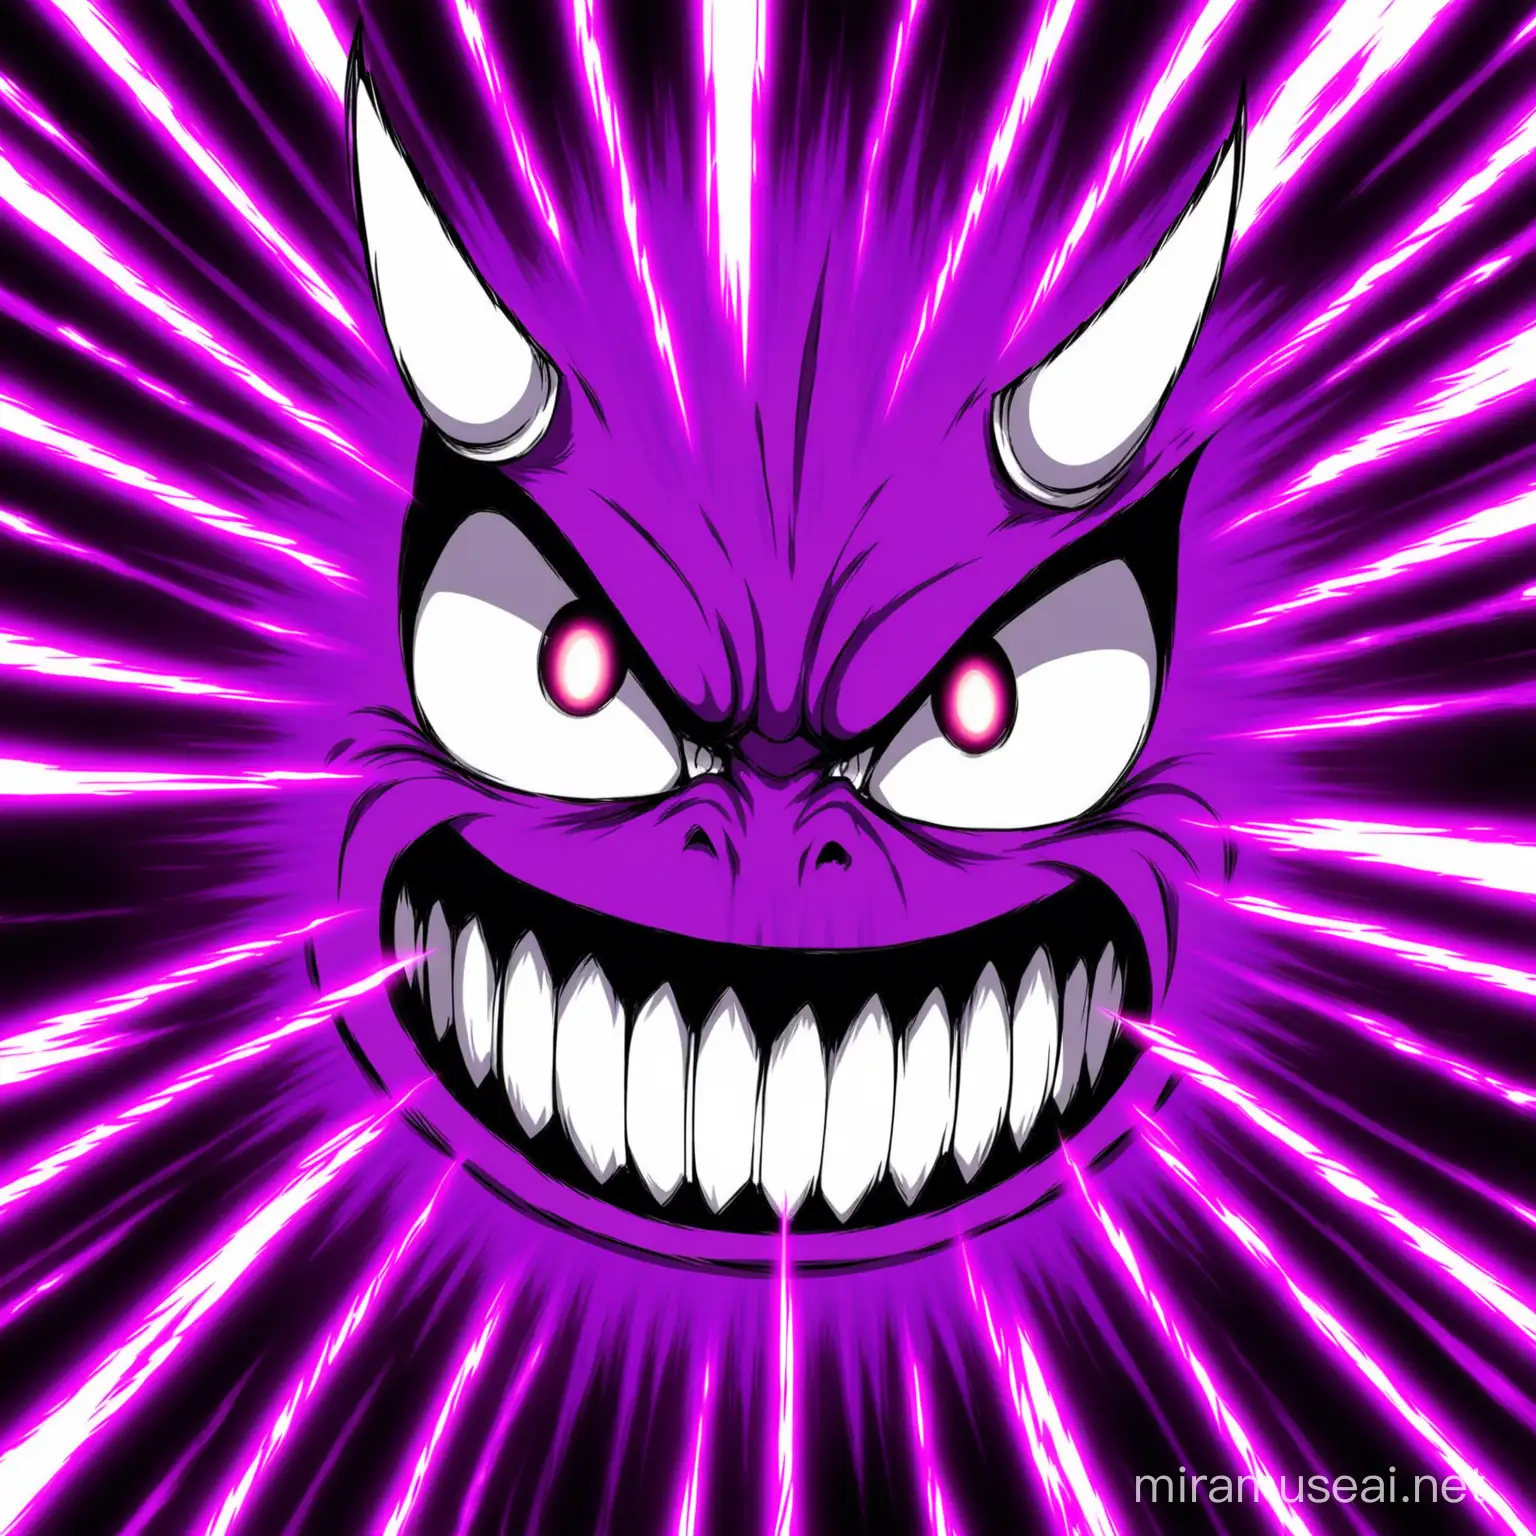 Fierce Anime Demon with Purple Aura